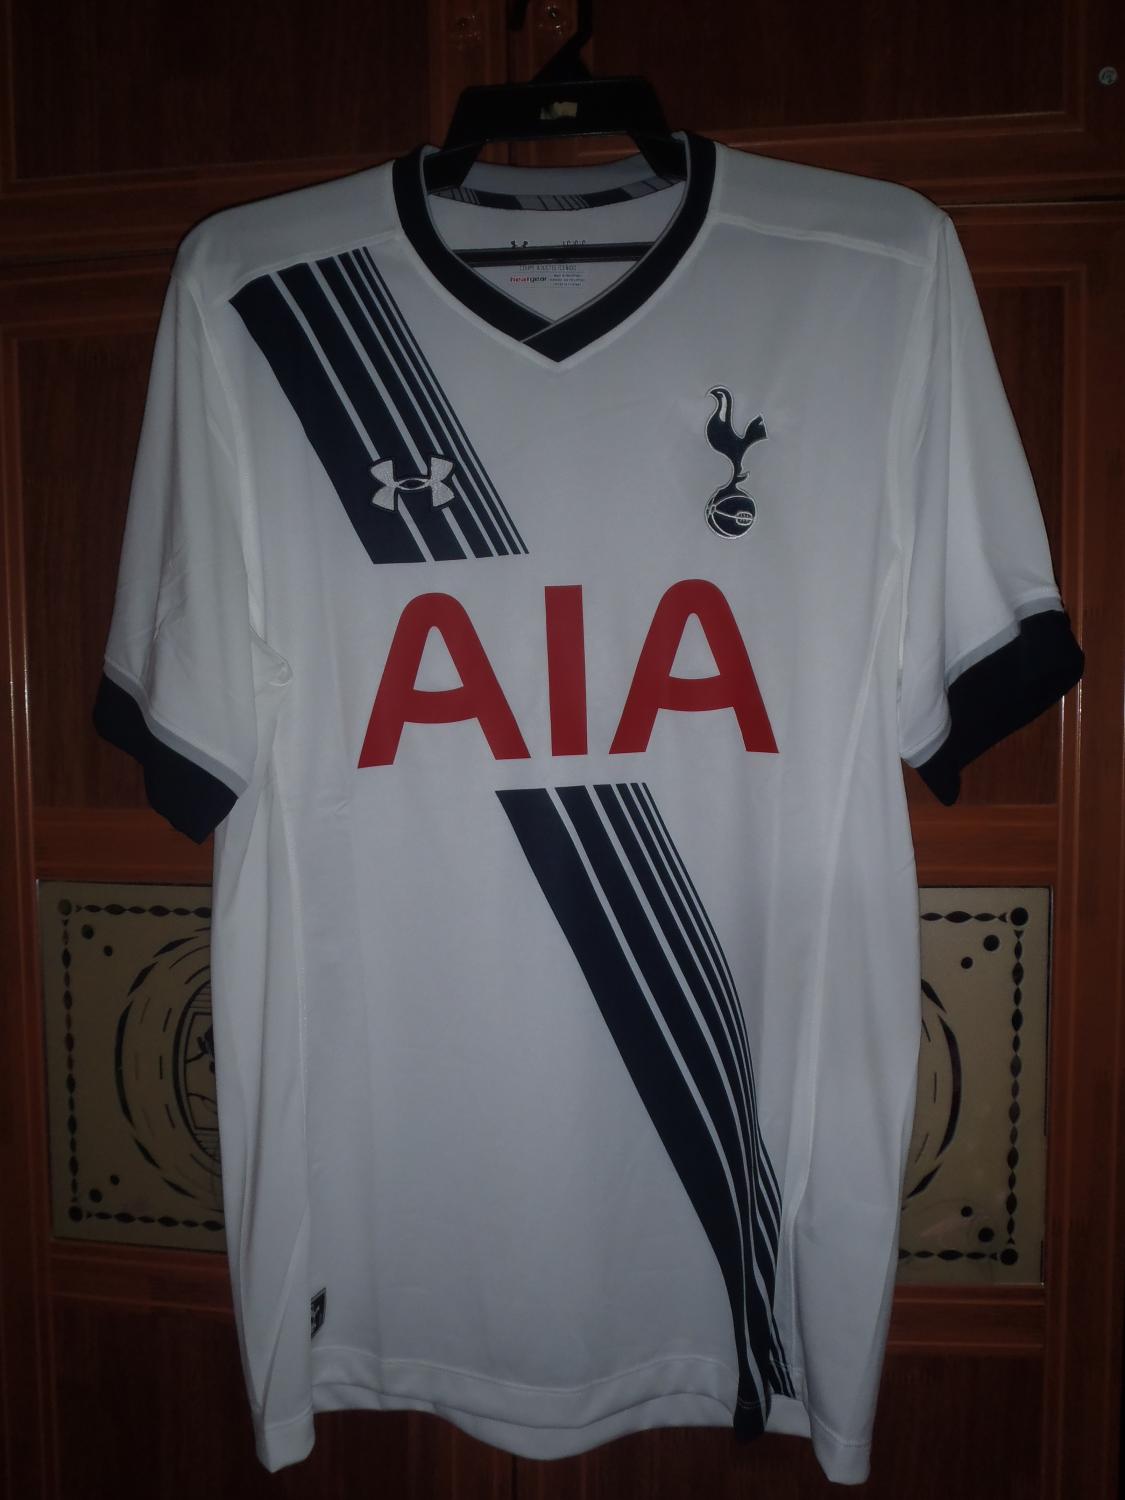 Tottenham Hotspur Home football shirt 2016. Sponsored by AIA